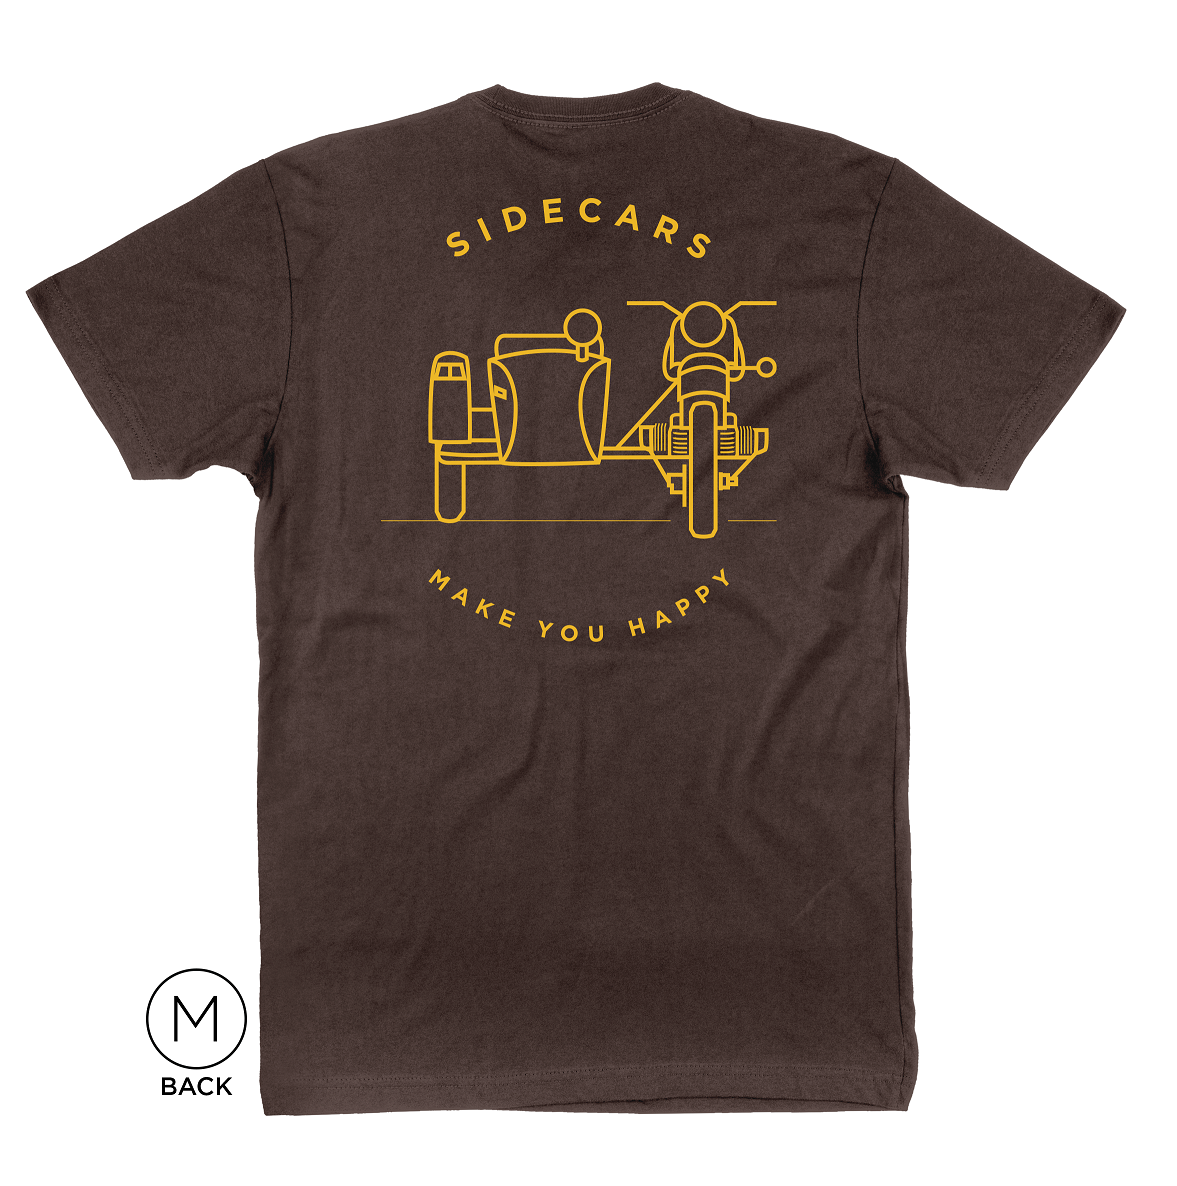 Sidecars Make You Happy T-Shirt Dark Chocolate